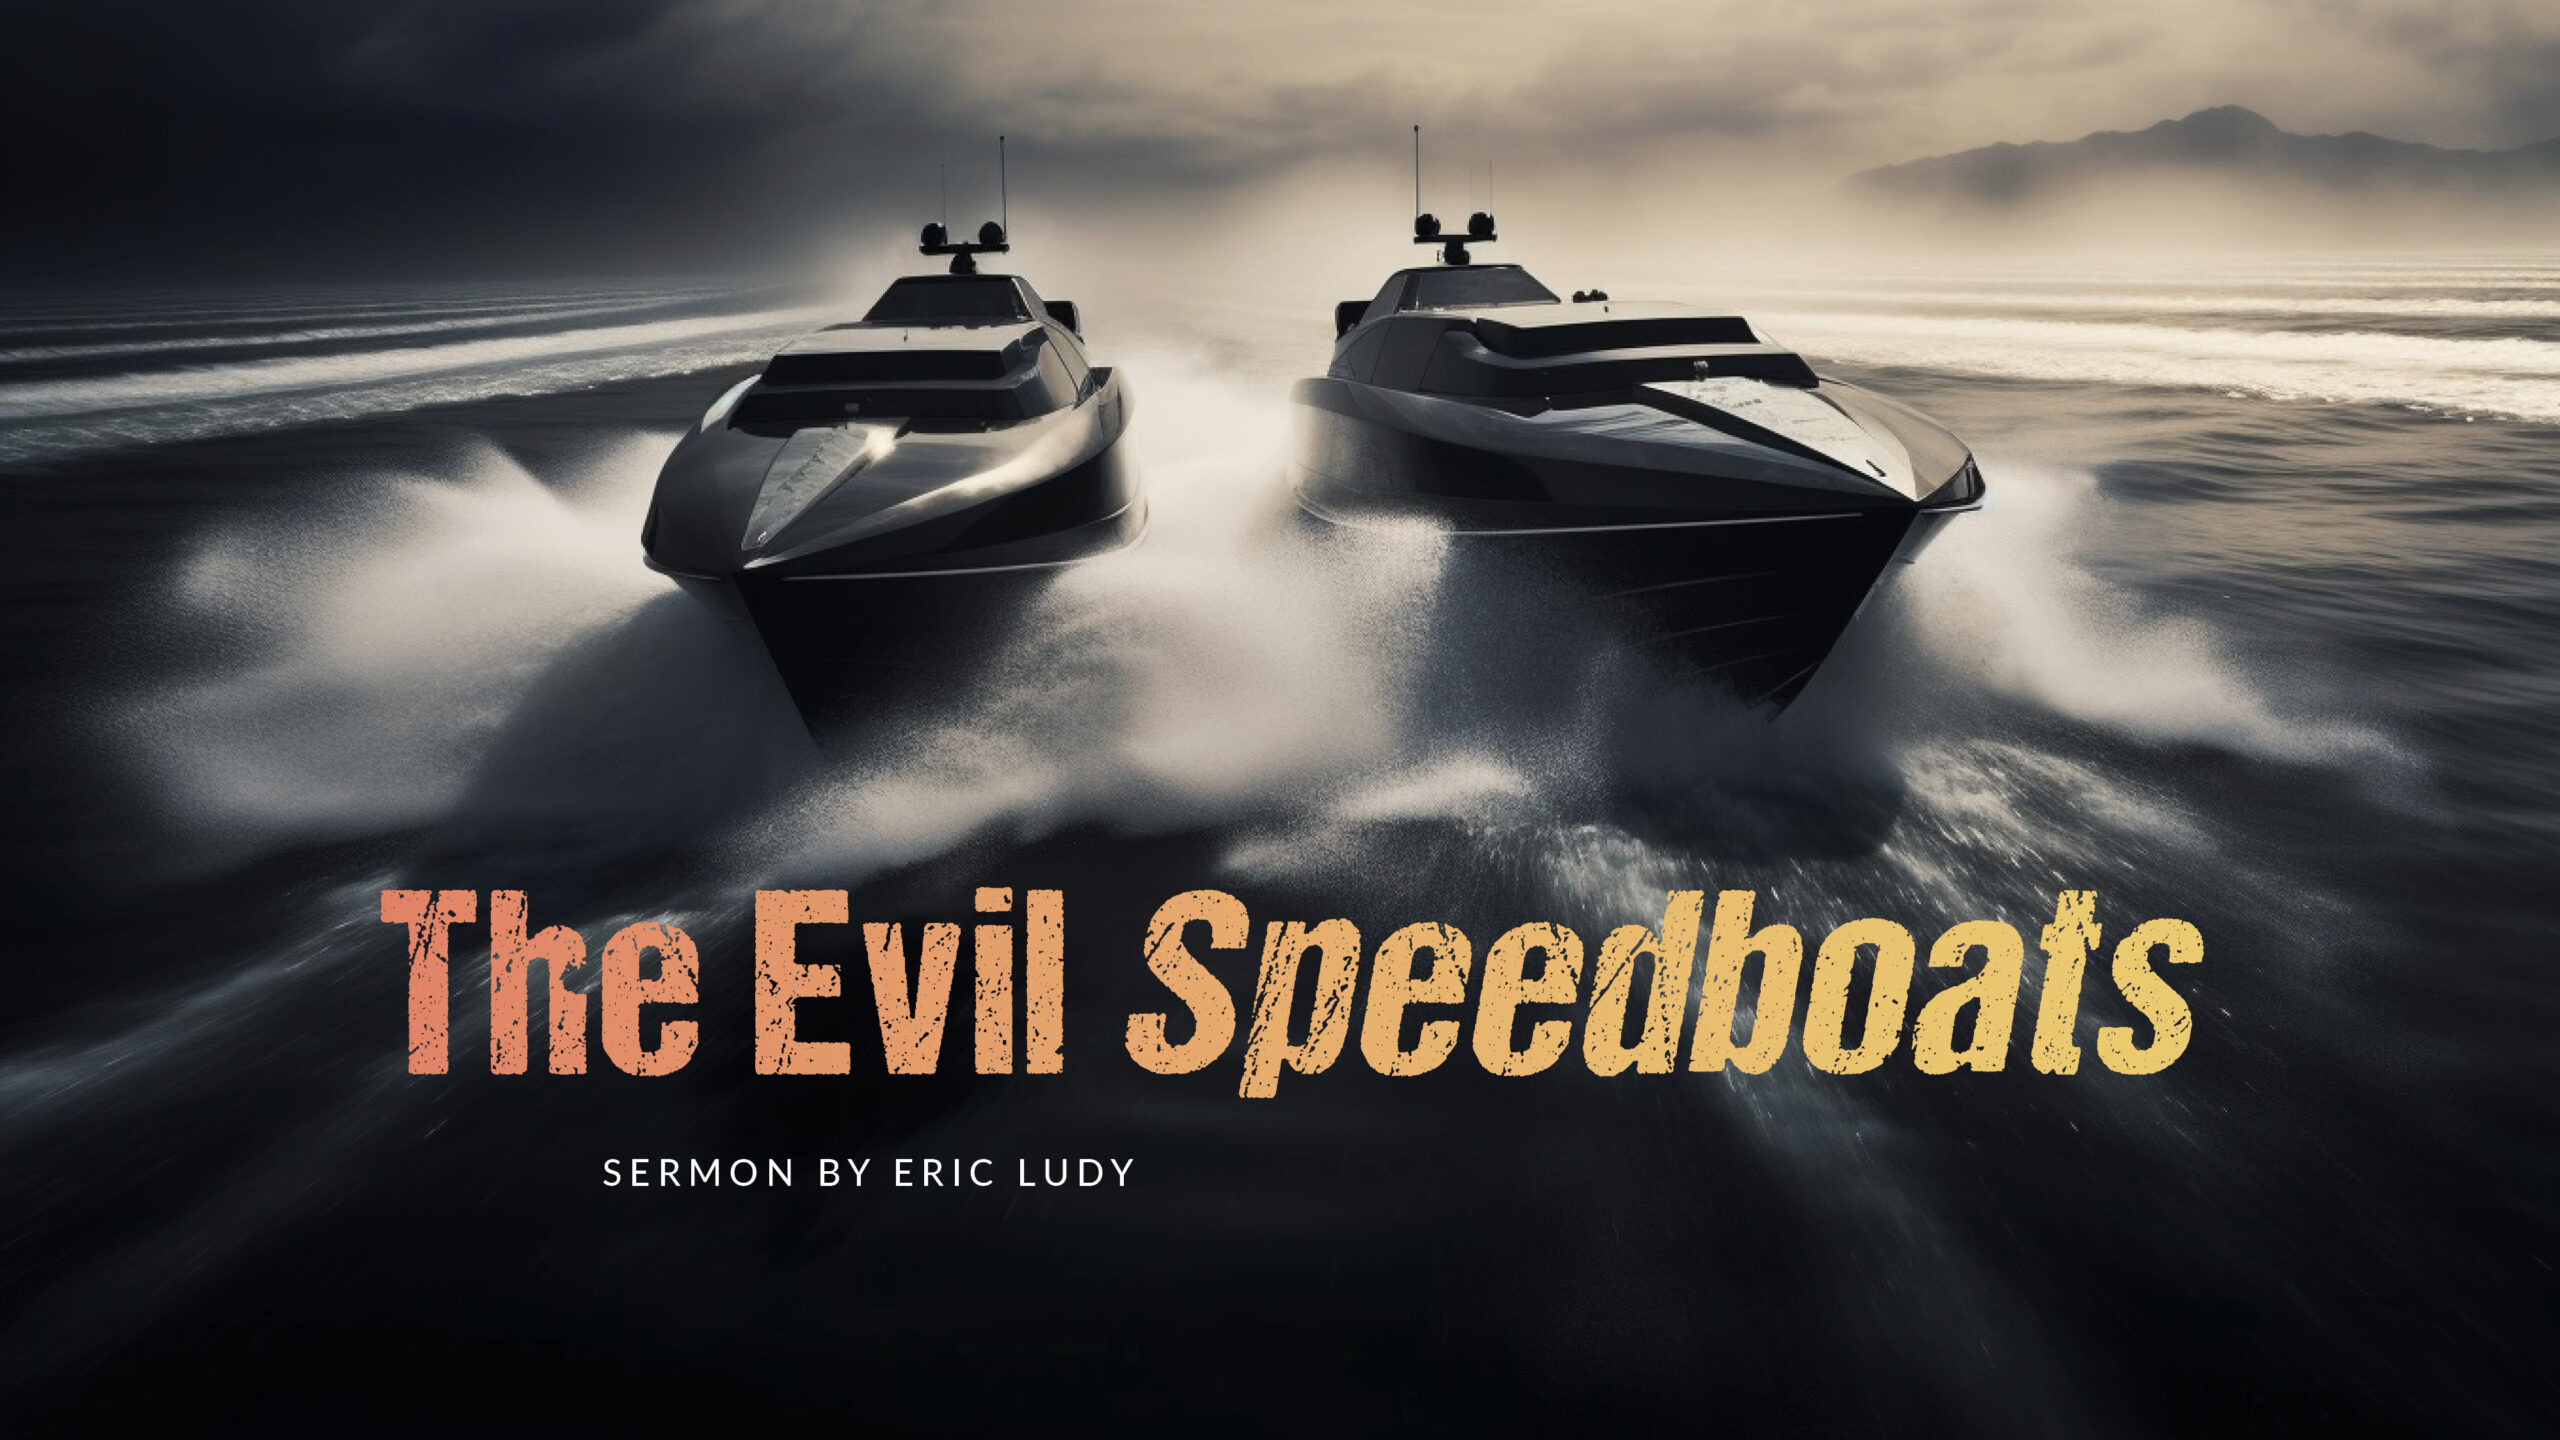 The Evil Speedboats